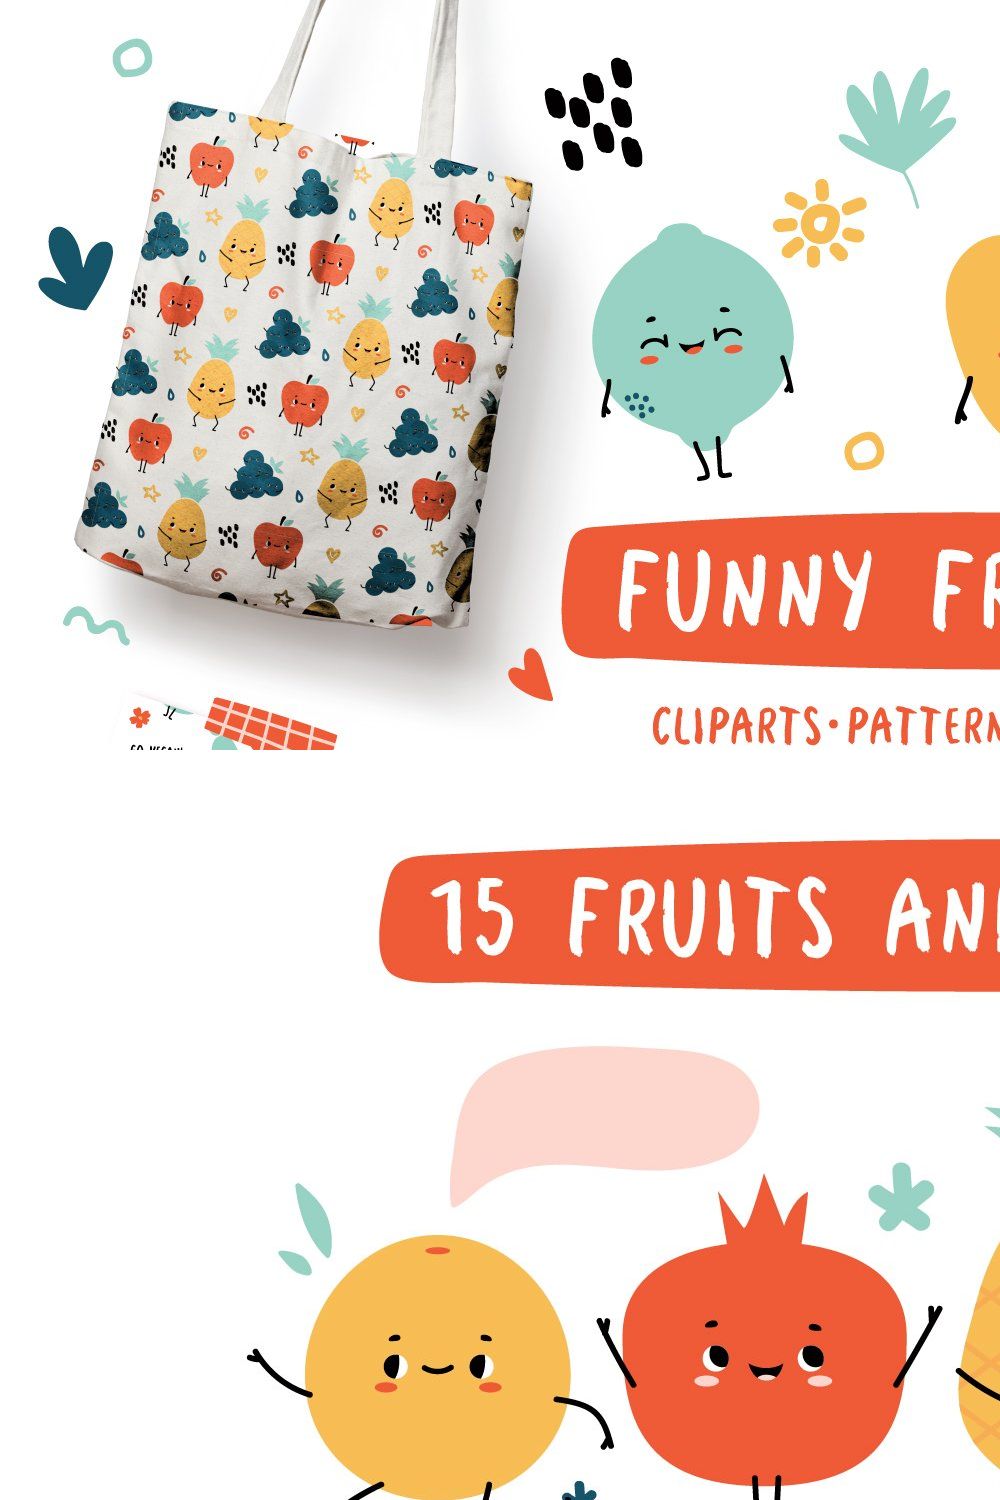 Cute kawaii fruit clipart + patterns pinterest preview image.